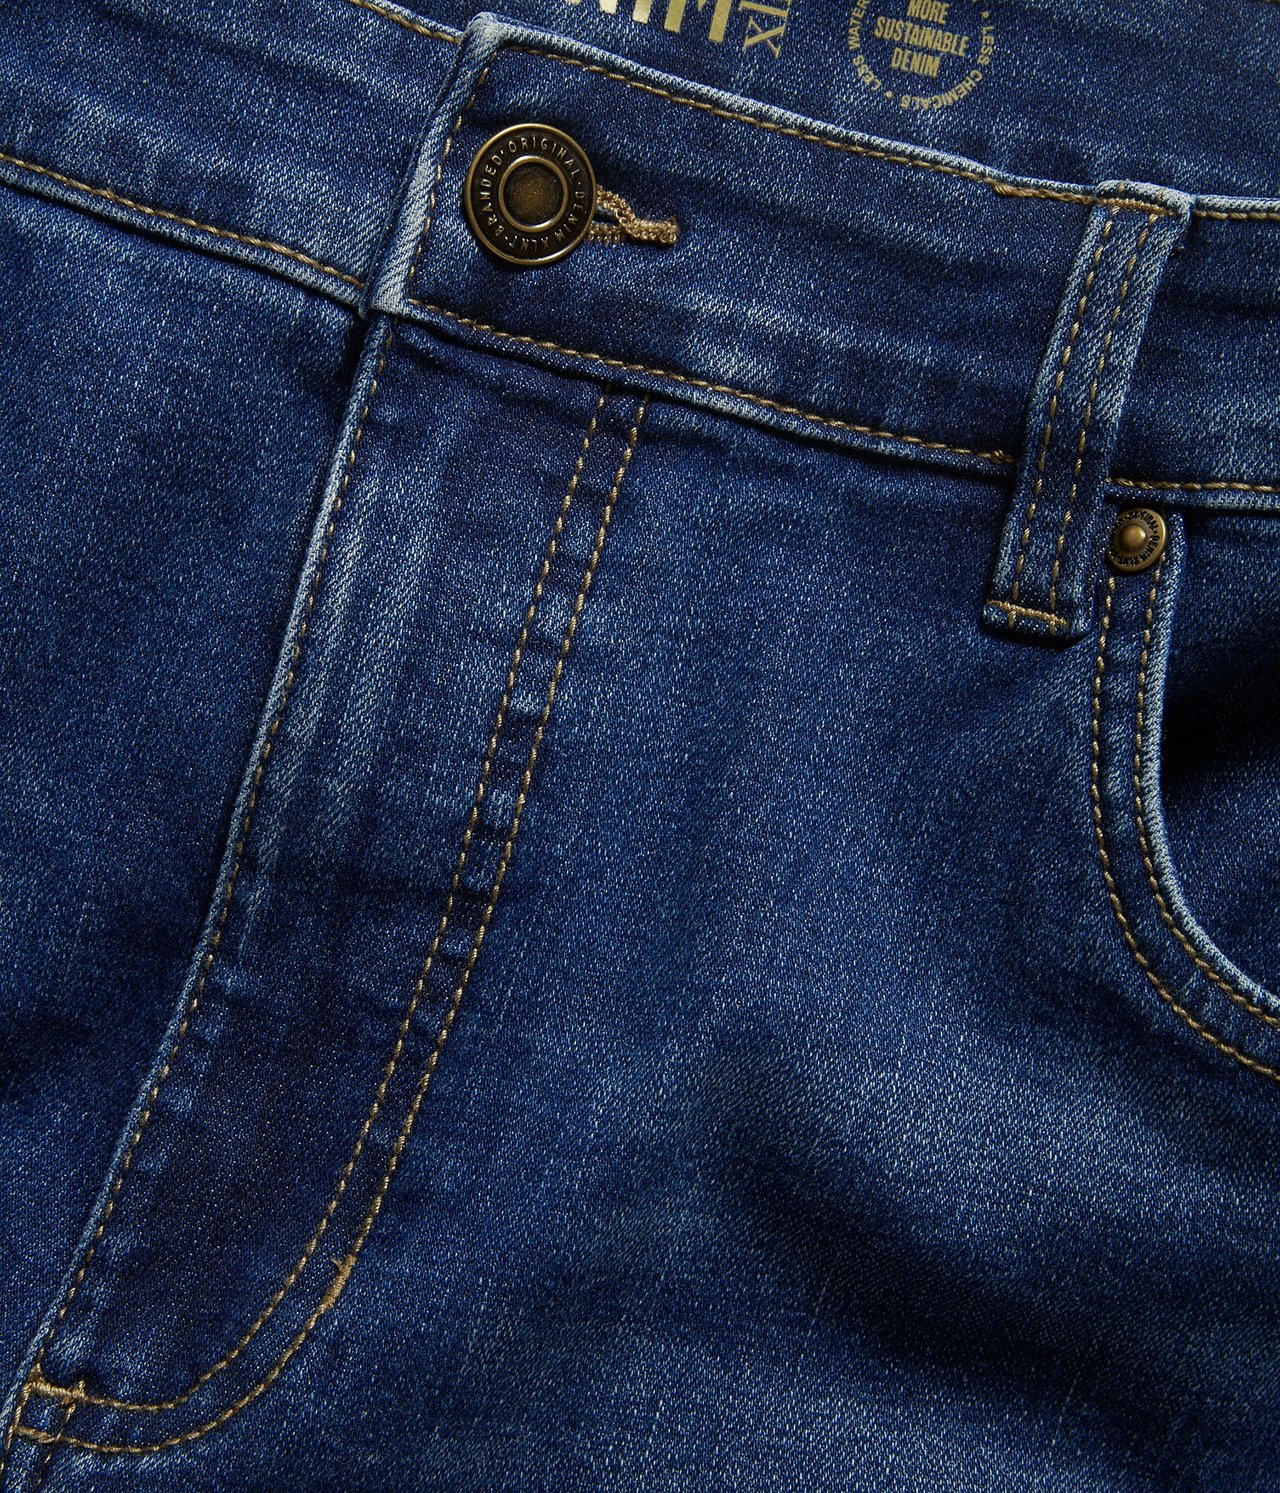 April bootcut jeans Denimi - null - 5